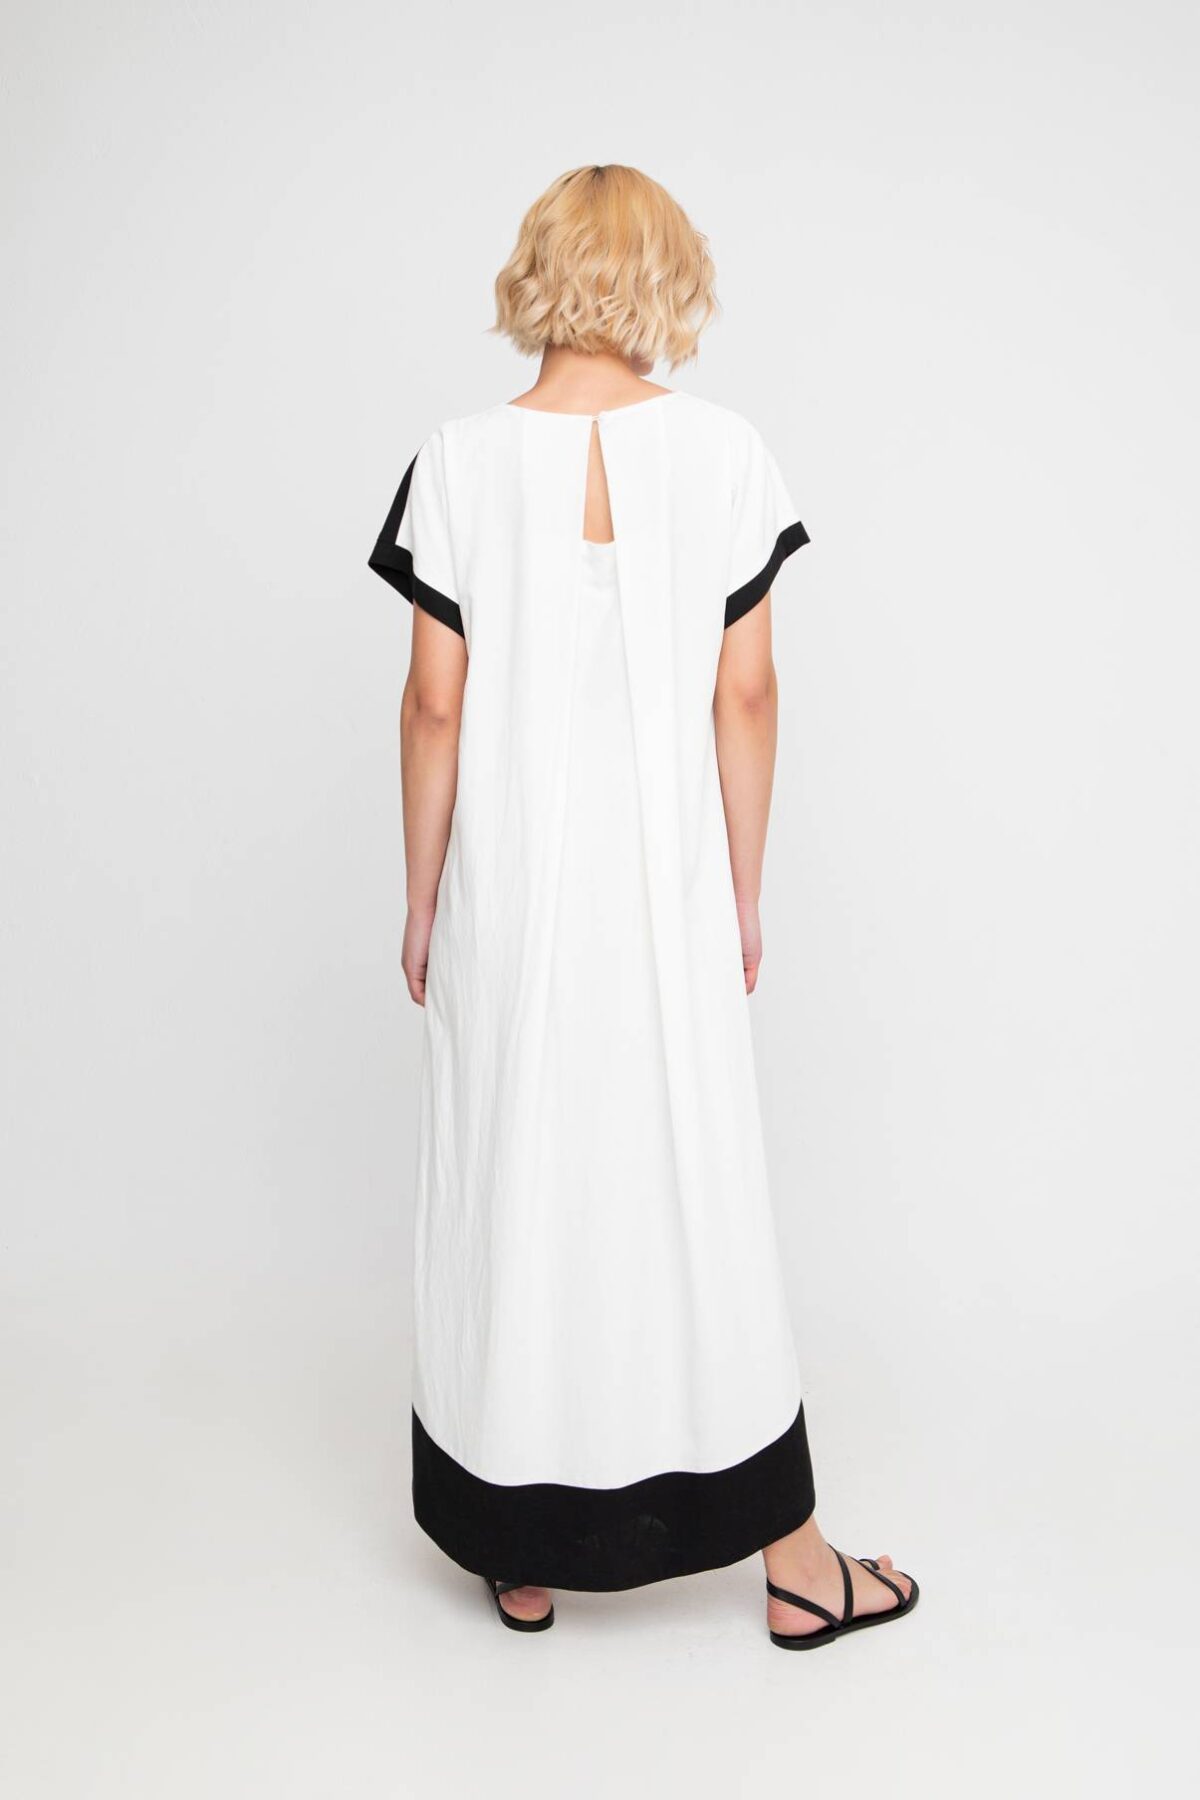 ozai_n-k_maxi-dress_black_white_v_neck_new_summer_spring_collection